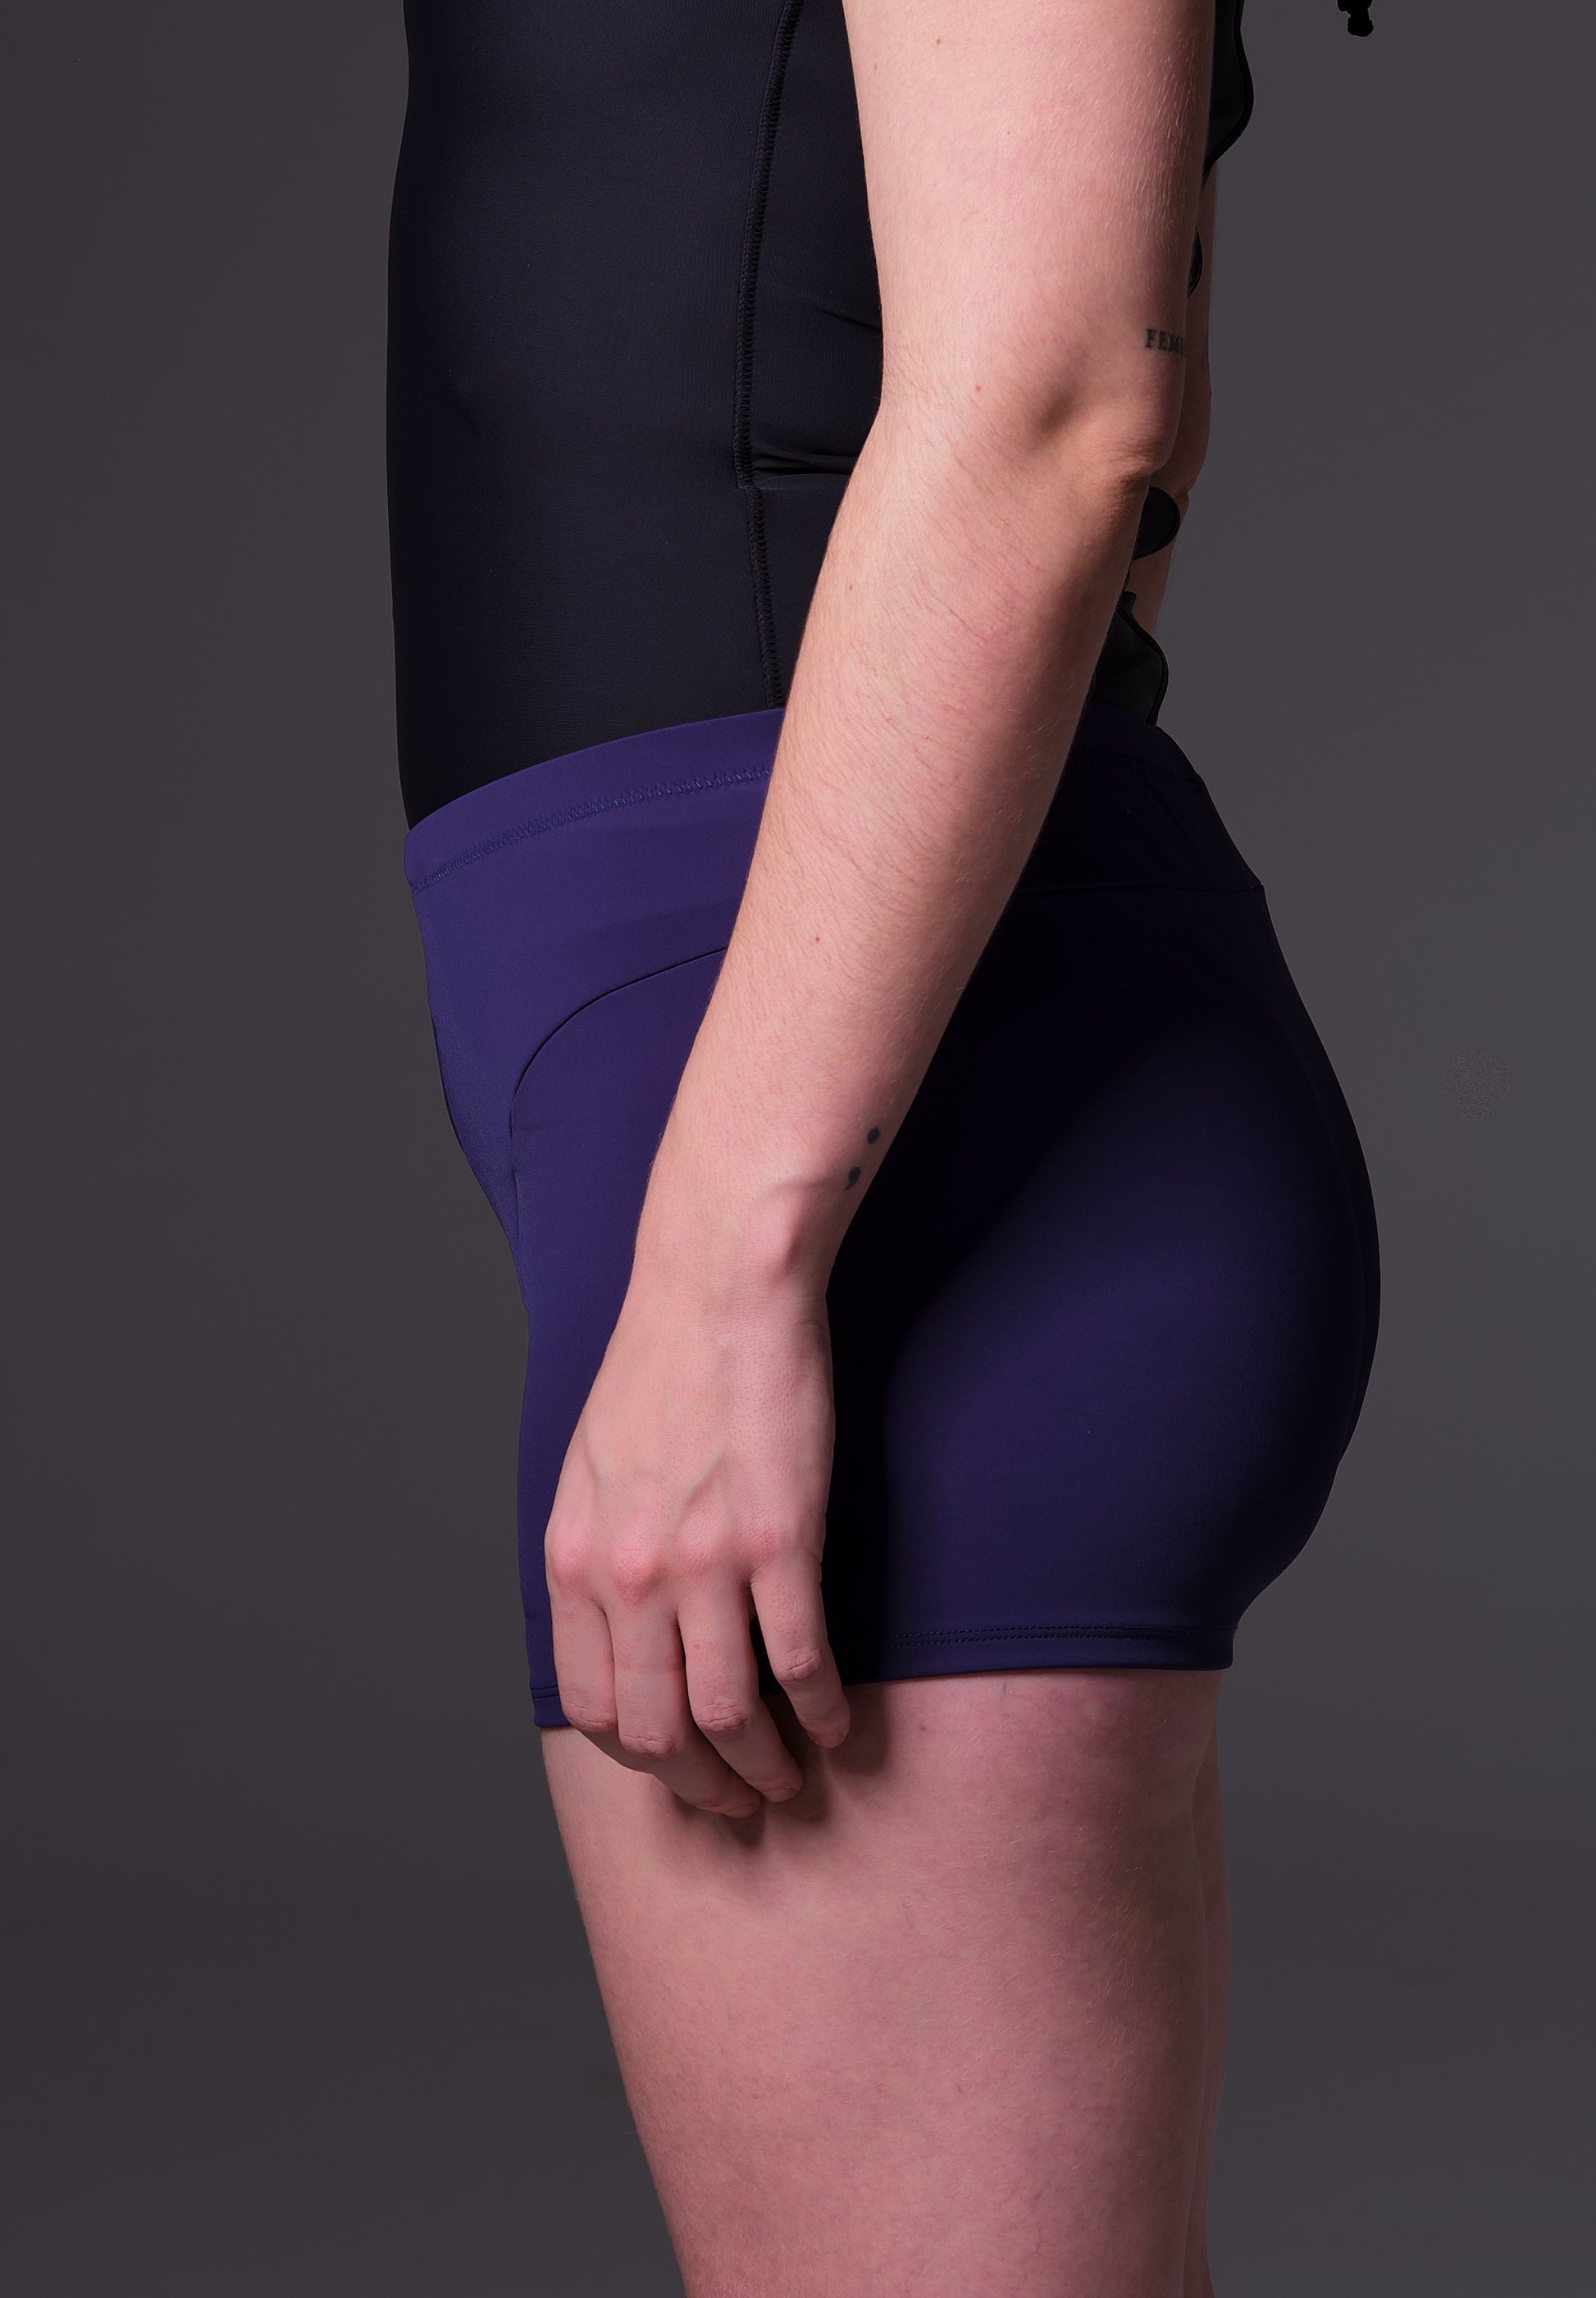 Lene wearing the Swim Shorts dark blue, side view, by UNTAG